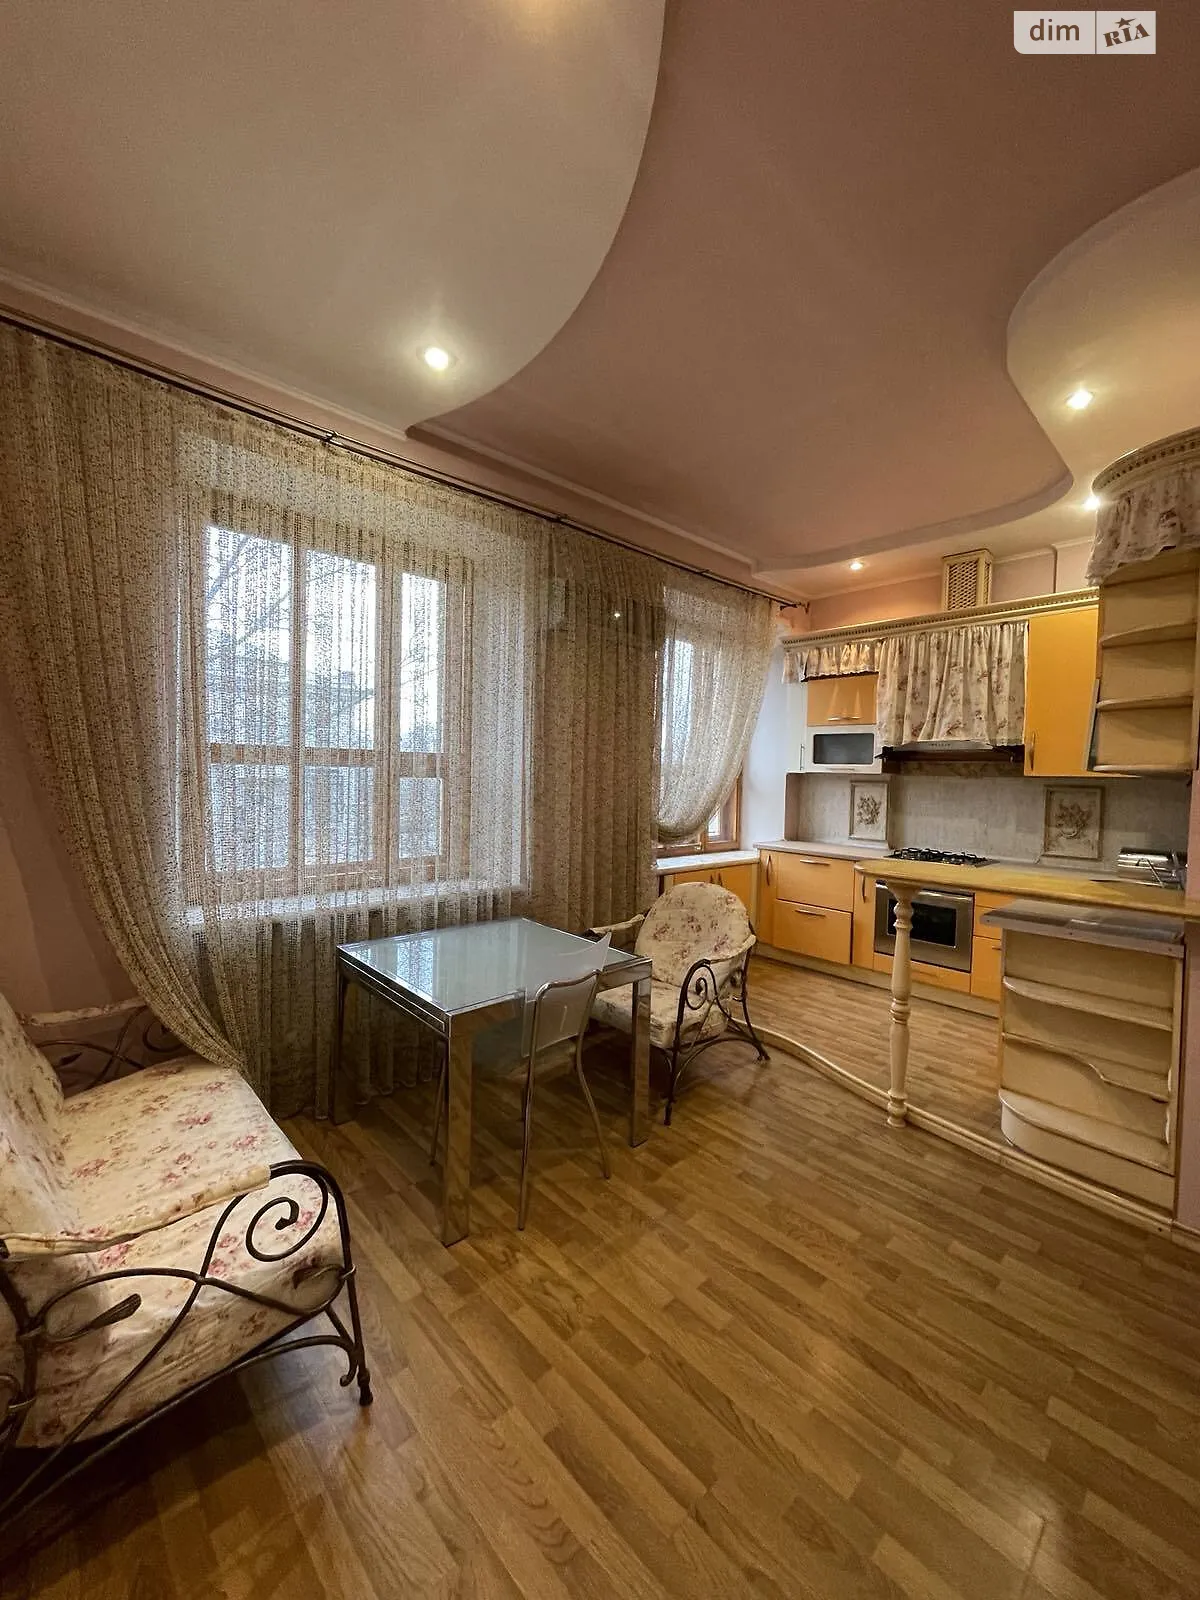 Сдается в аренду 3-комнатная квартира 75 кв. м в Николаеве - фото 2